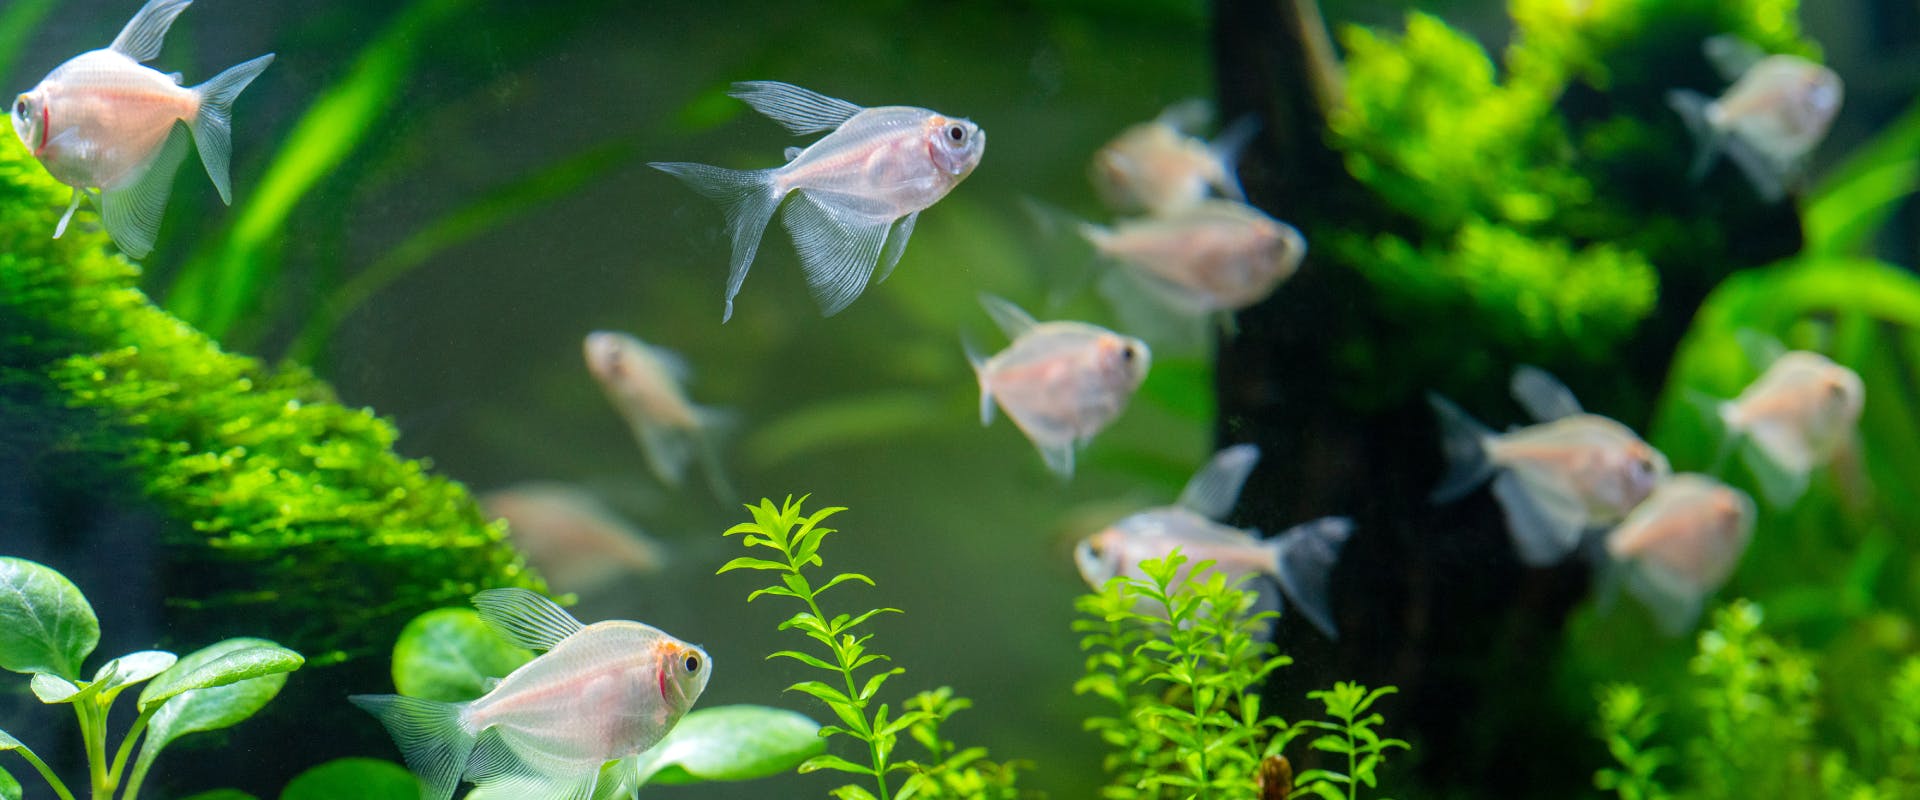 A group of fish in an aquarium